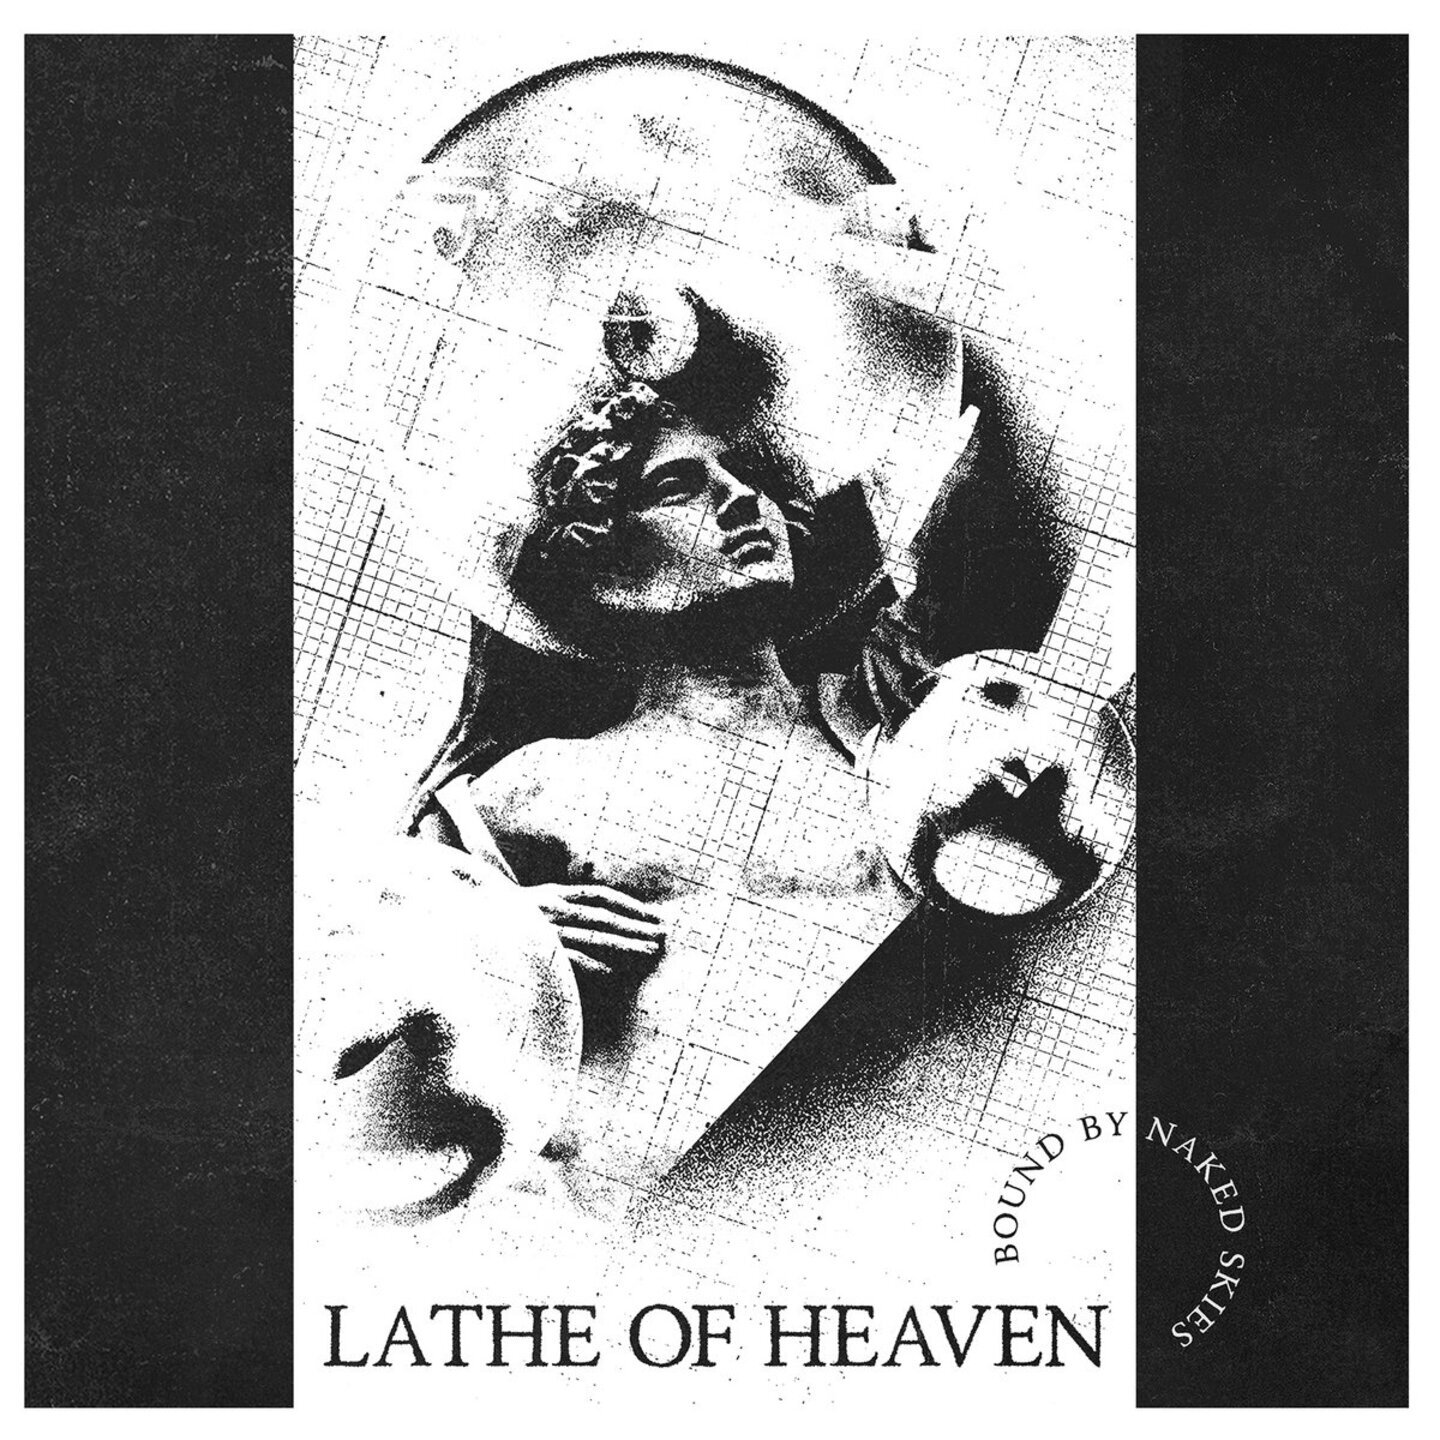 LATHE OF HEAVEN - Bound By Naked Skies White vinyl